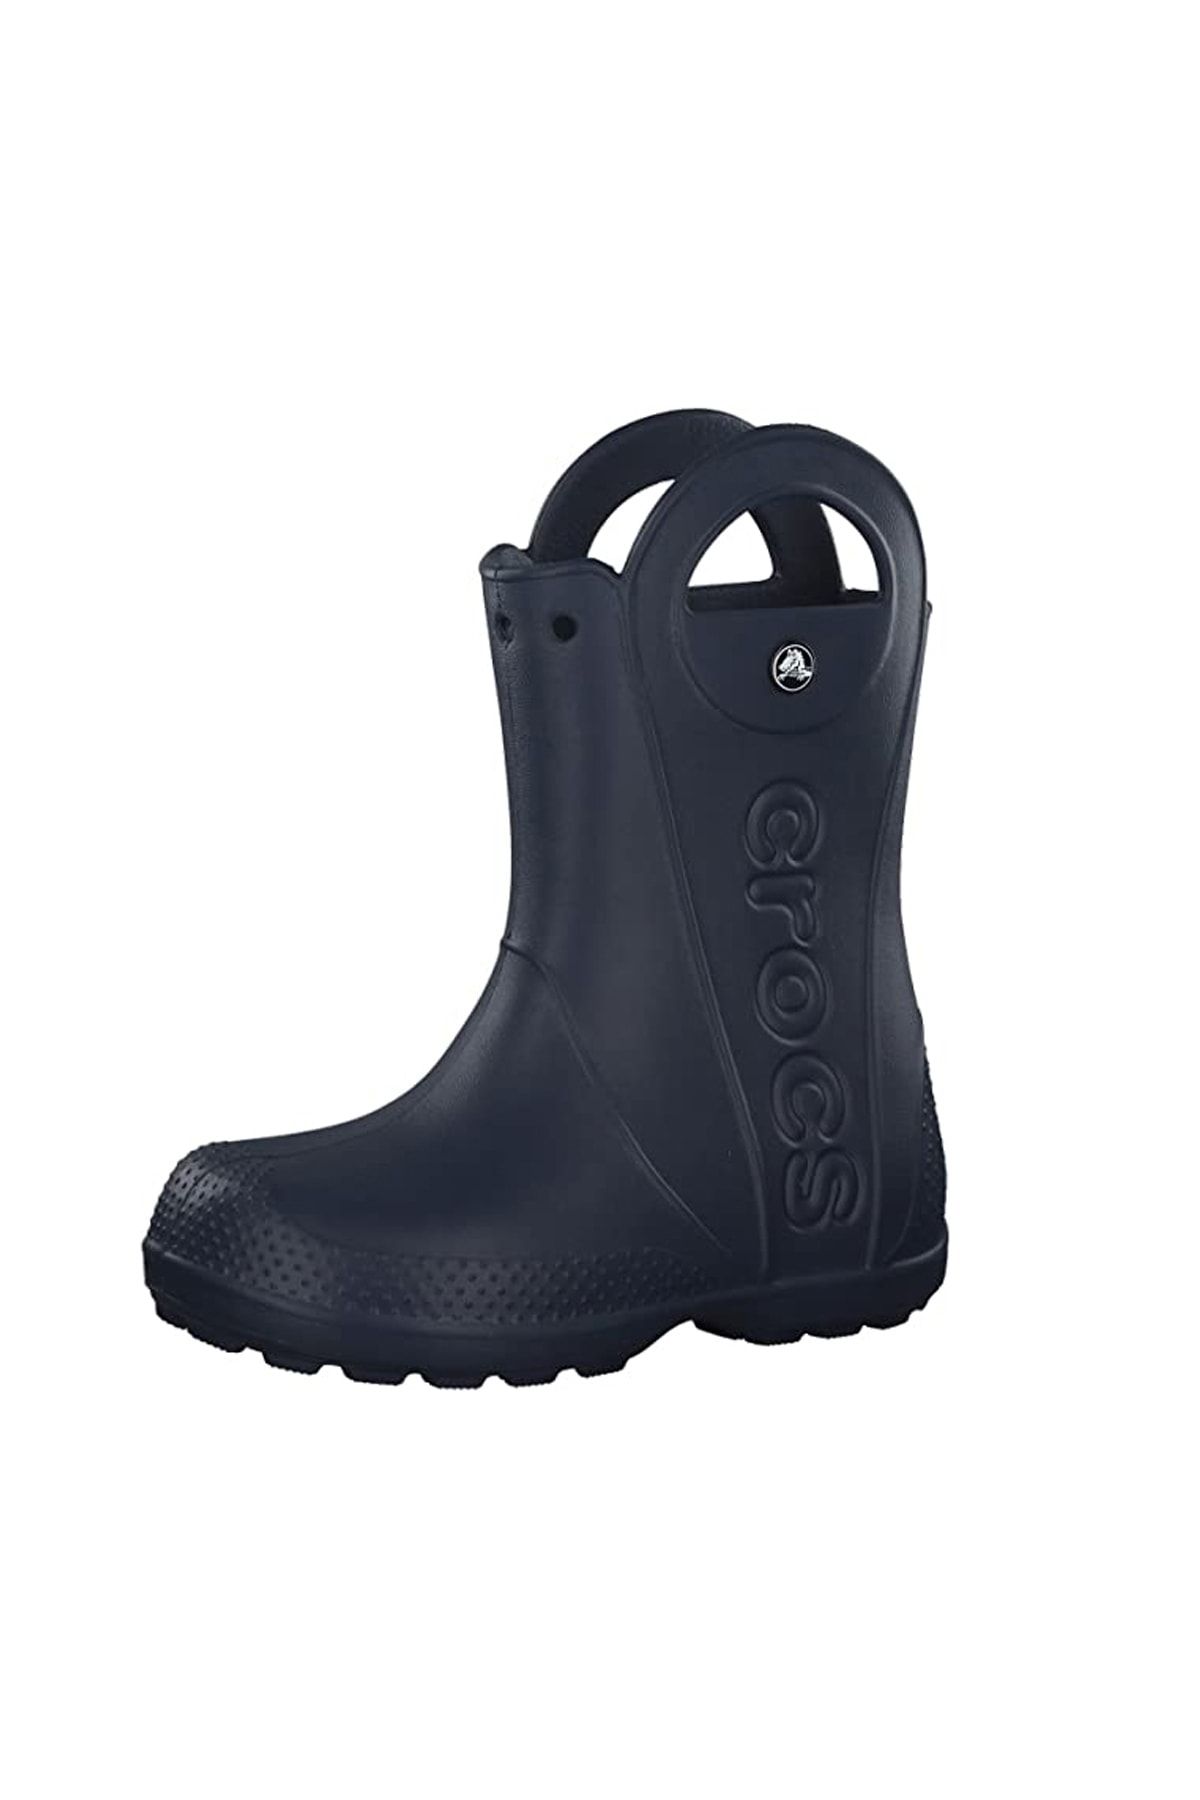 Crocs 12803-410-b Laci Handle It Rain Boot Kids